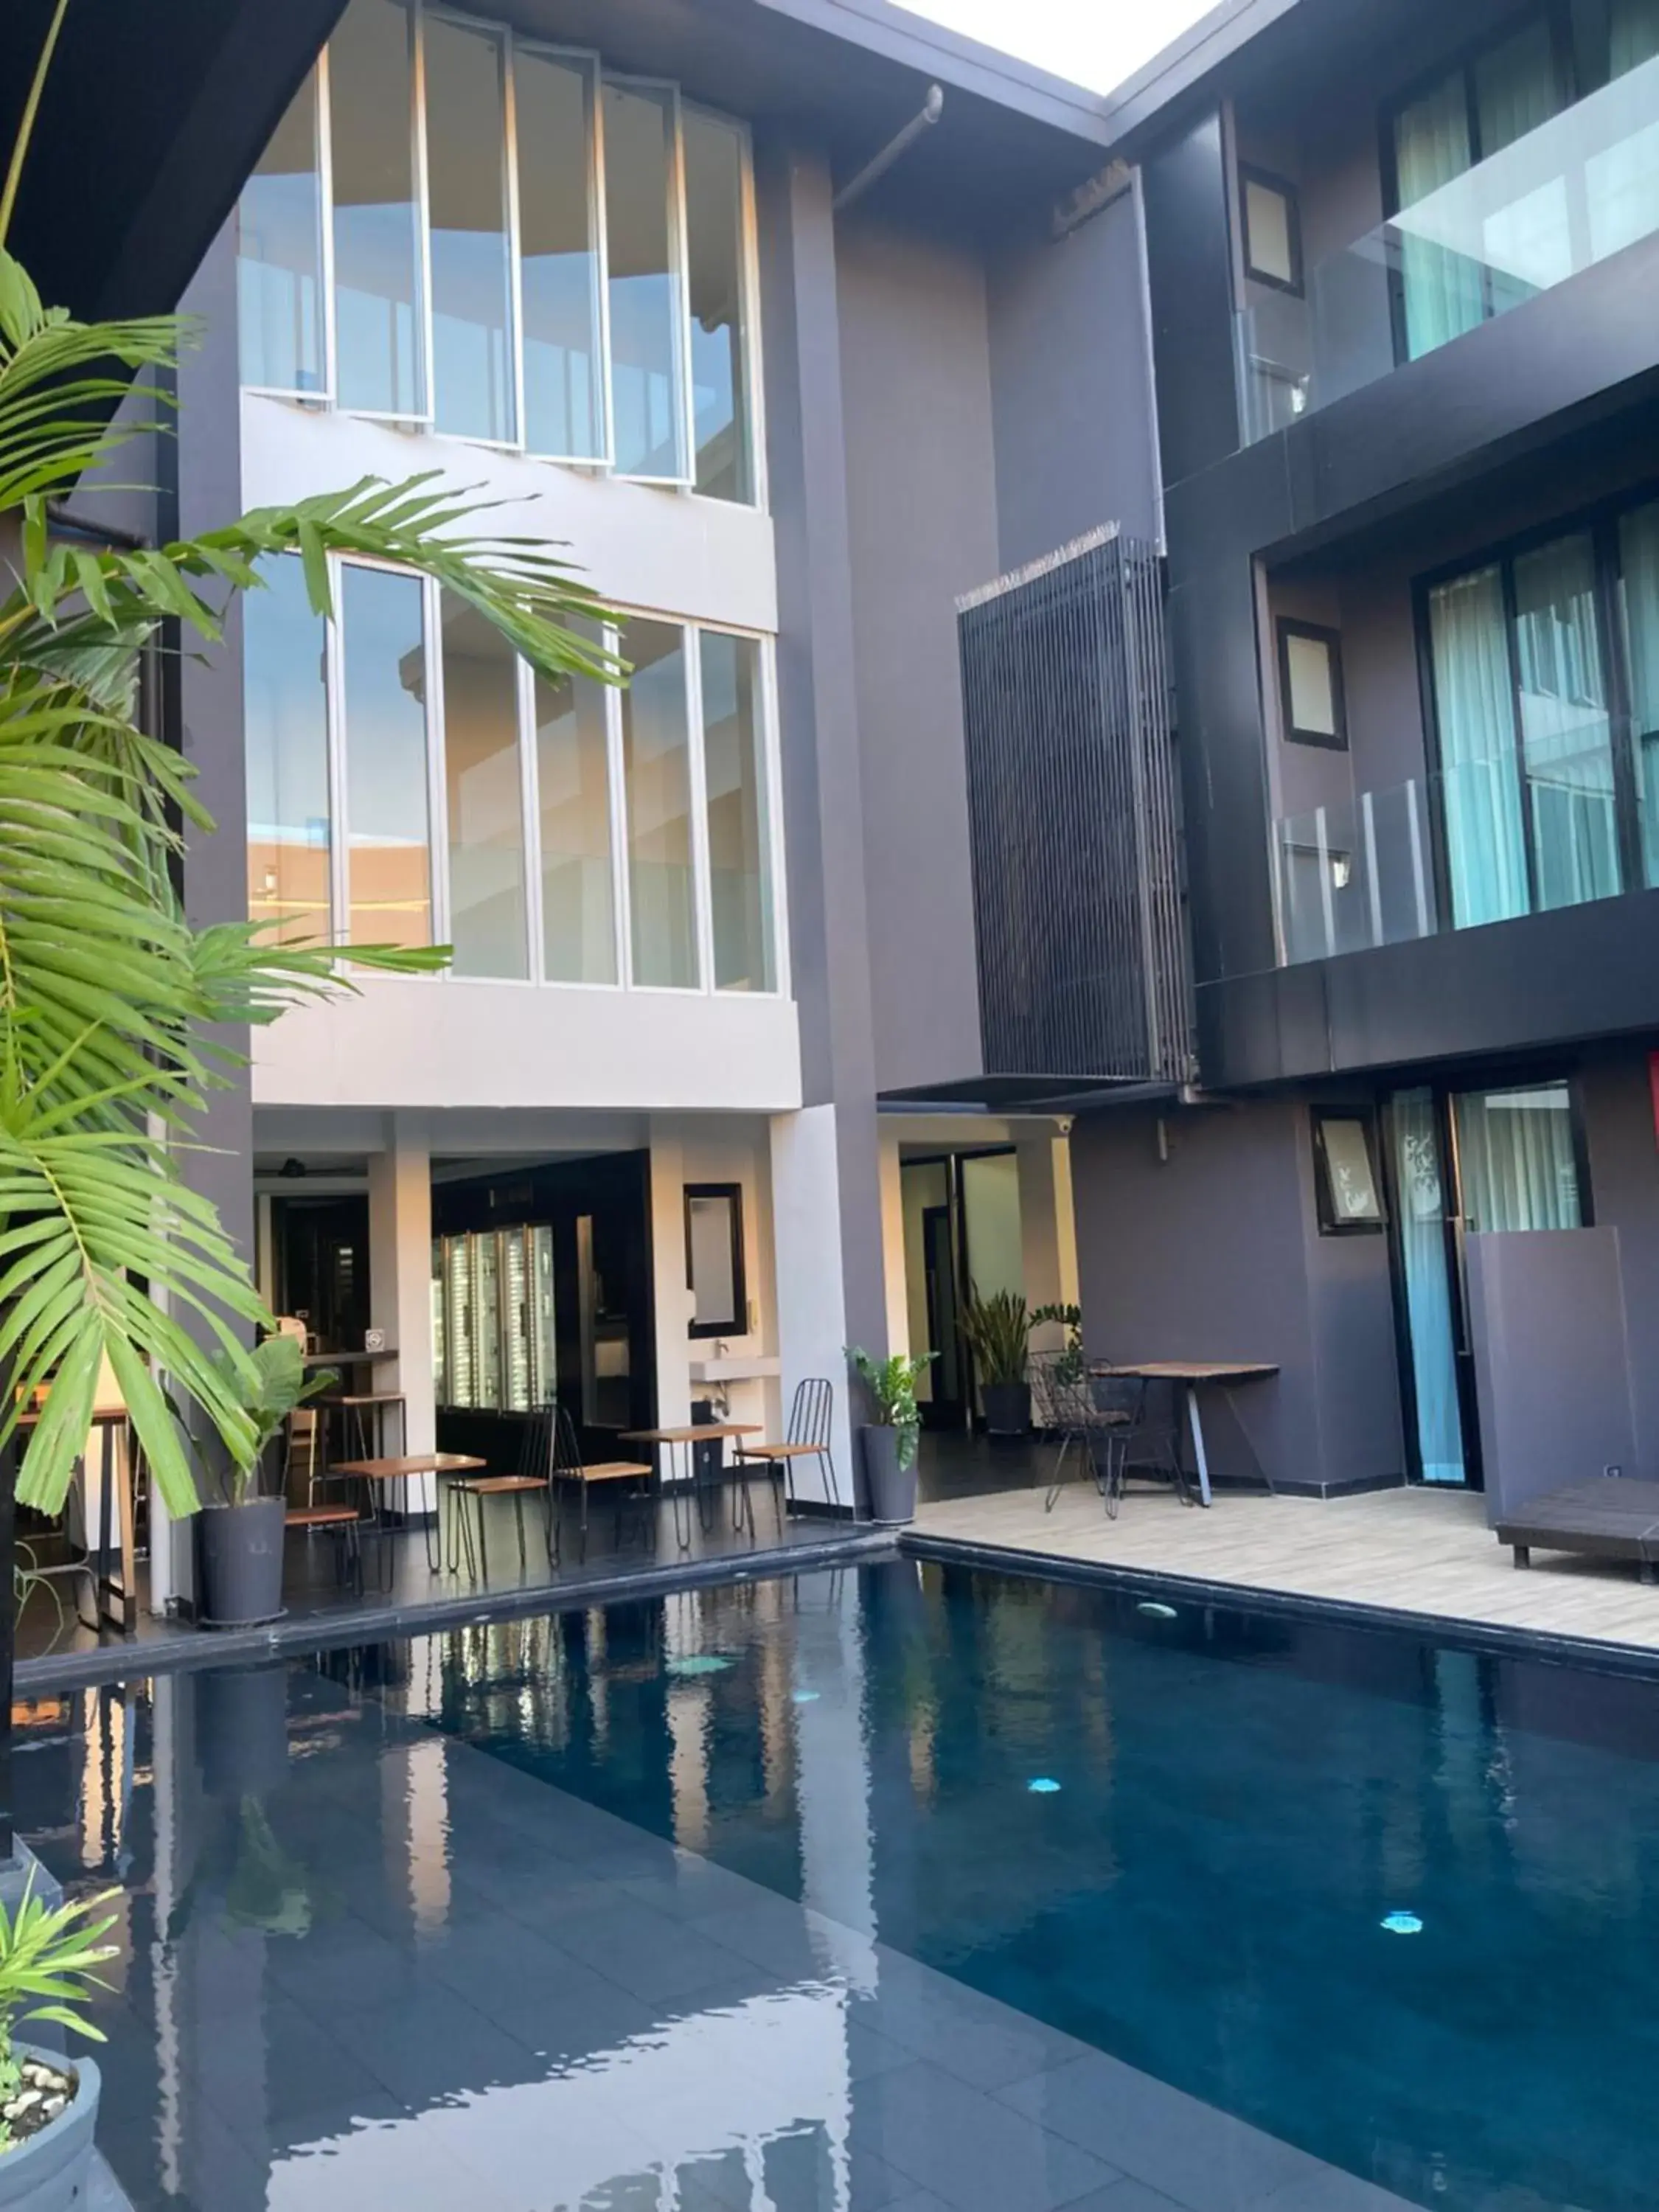 Property building, Swimming Pool in iWualai Hotel